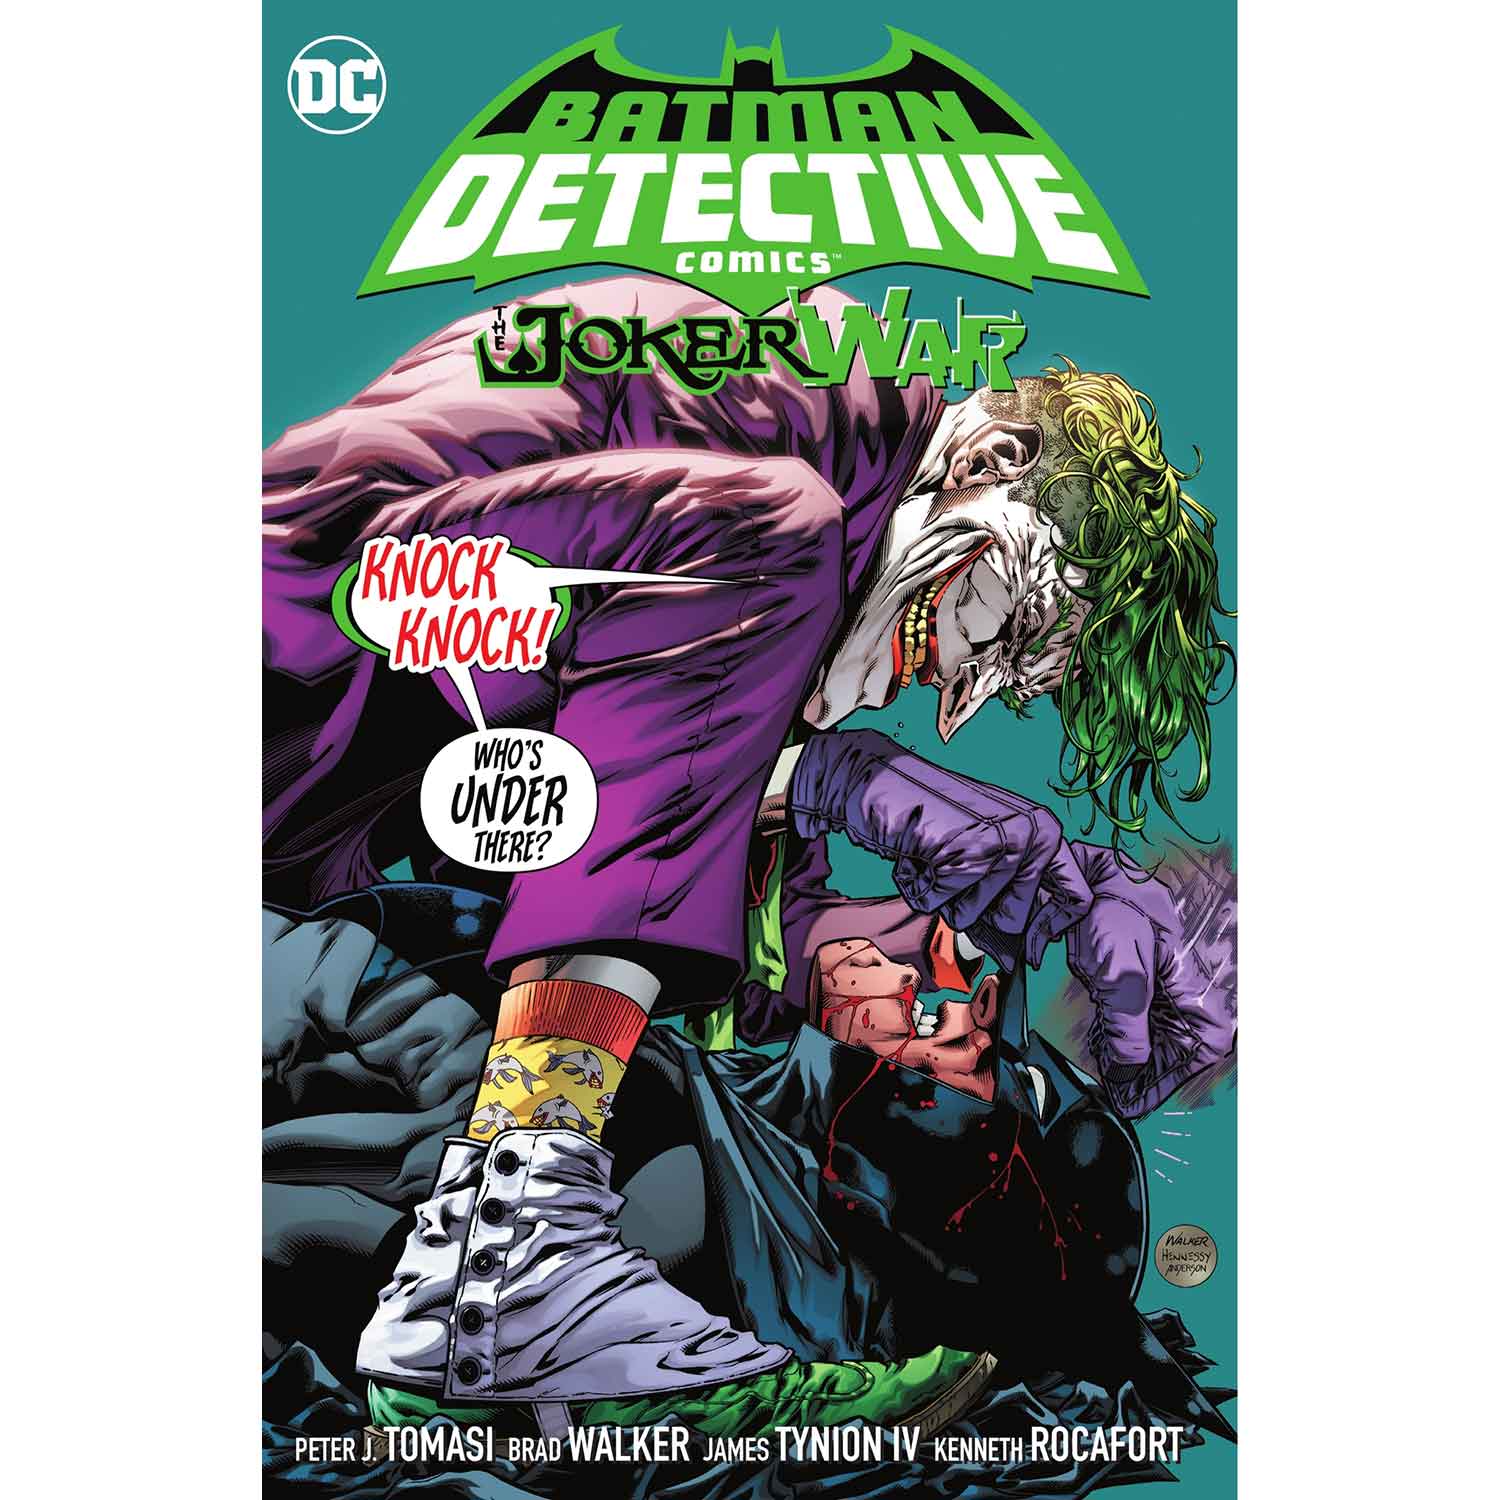 Batman Detective Comics 5 : The Joker War (Batman) [Hardcover]